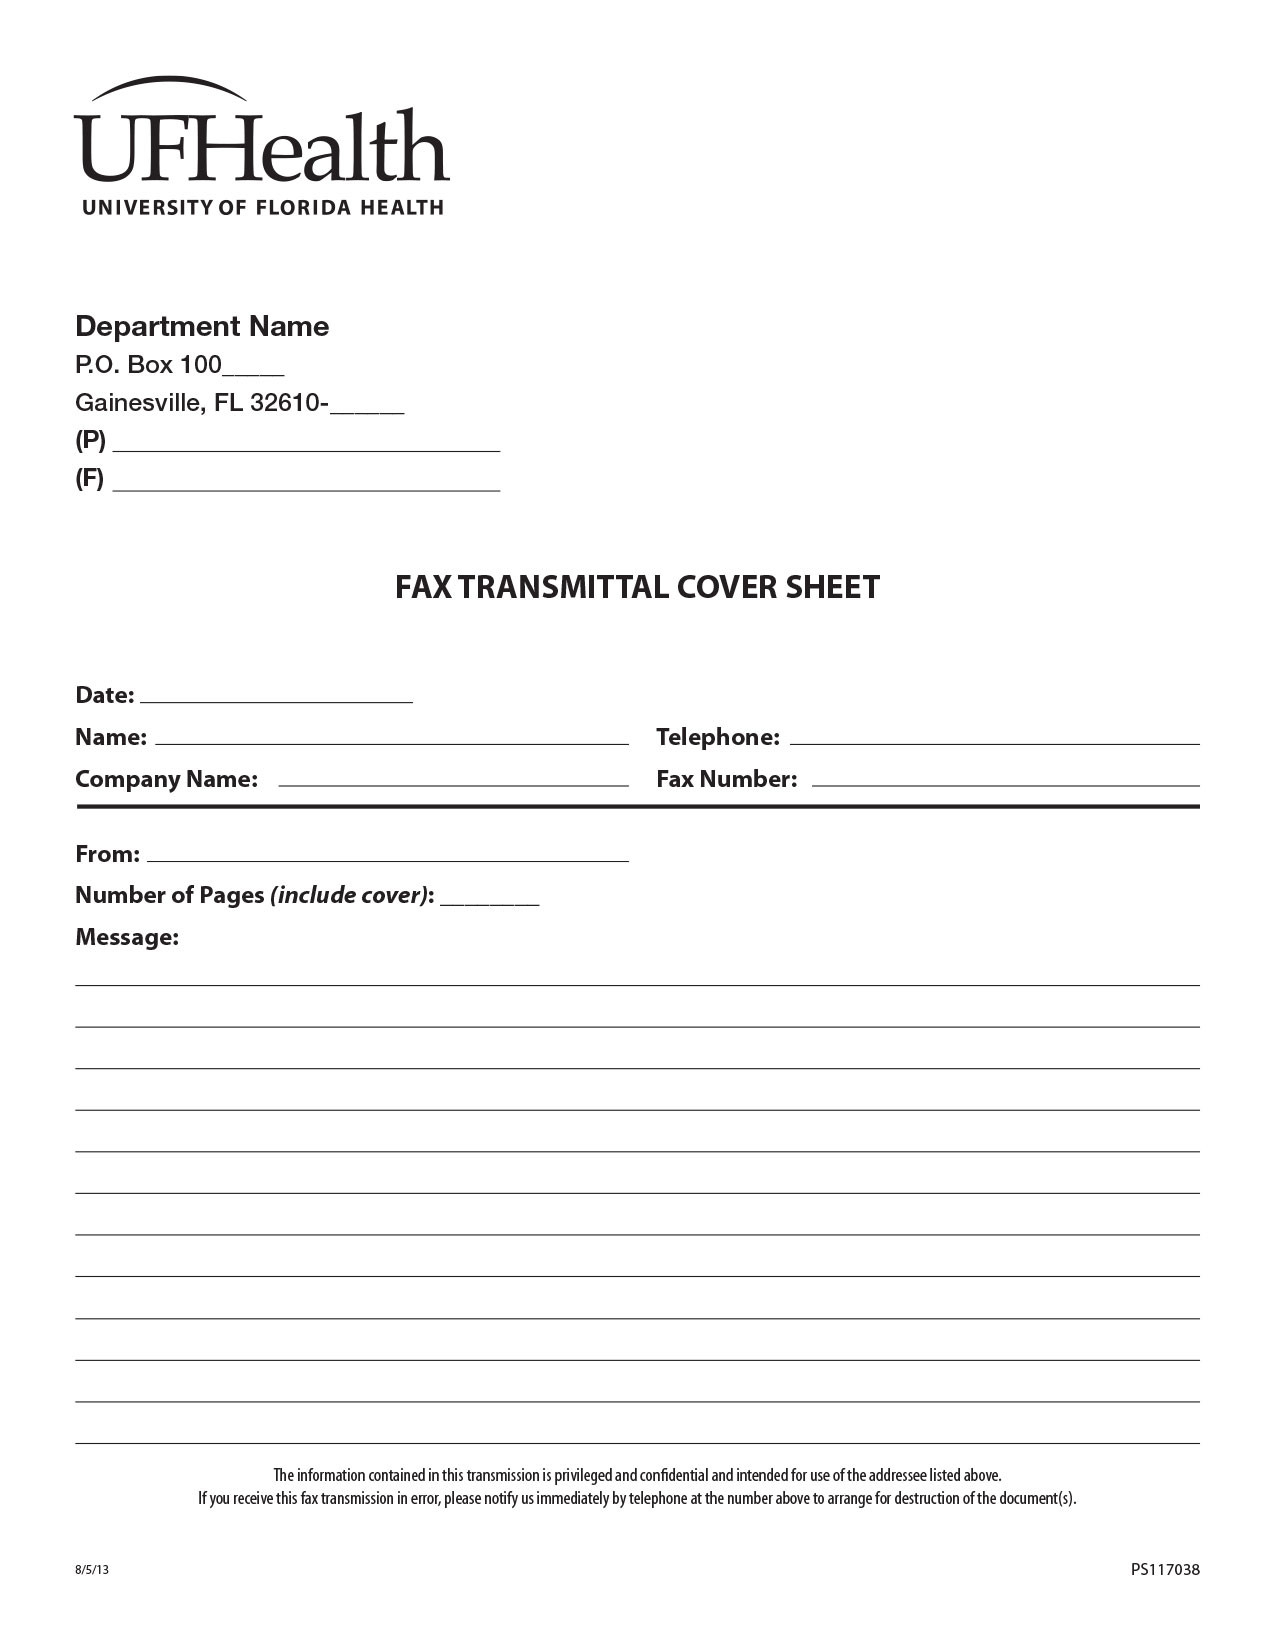 10 Printable Fax Cover Sheet Templates | Proposal Sample For Fax Cover Sheet Template Word 2010